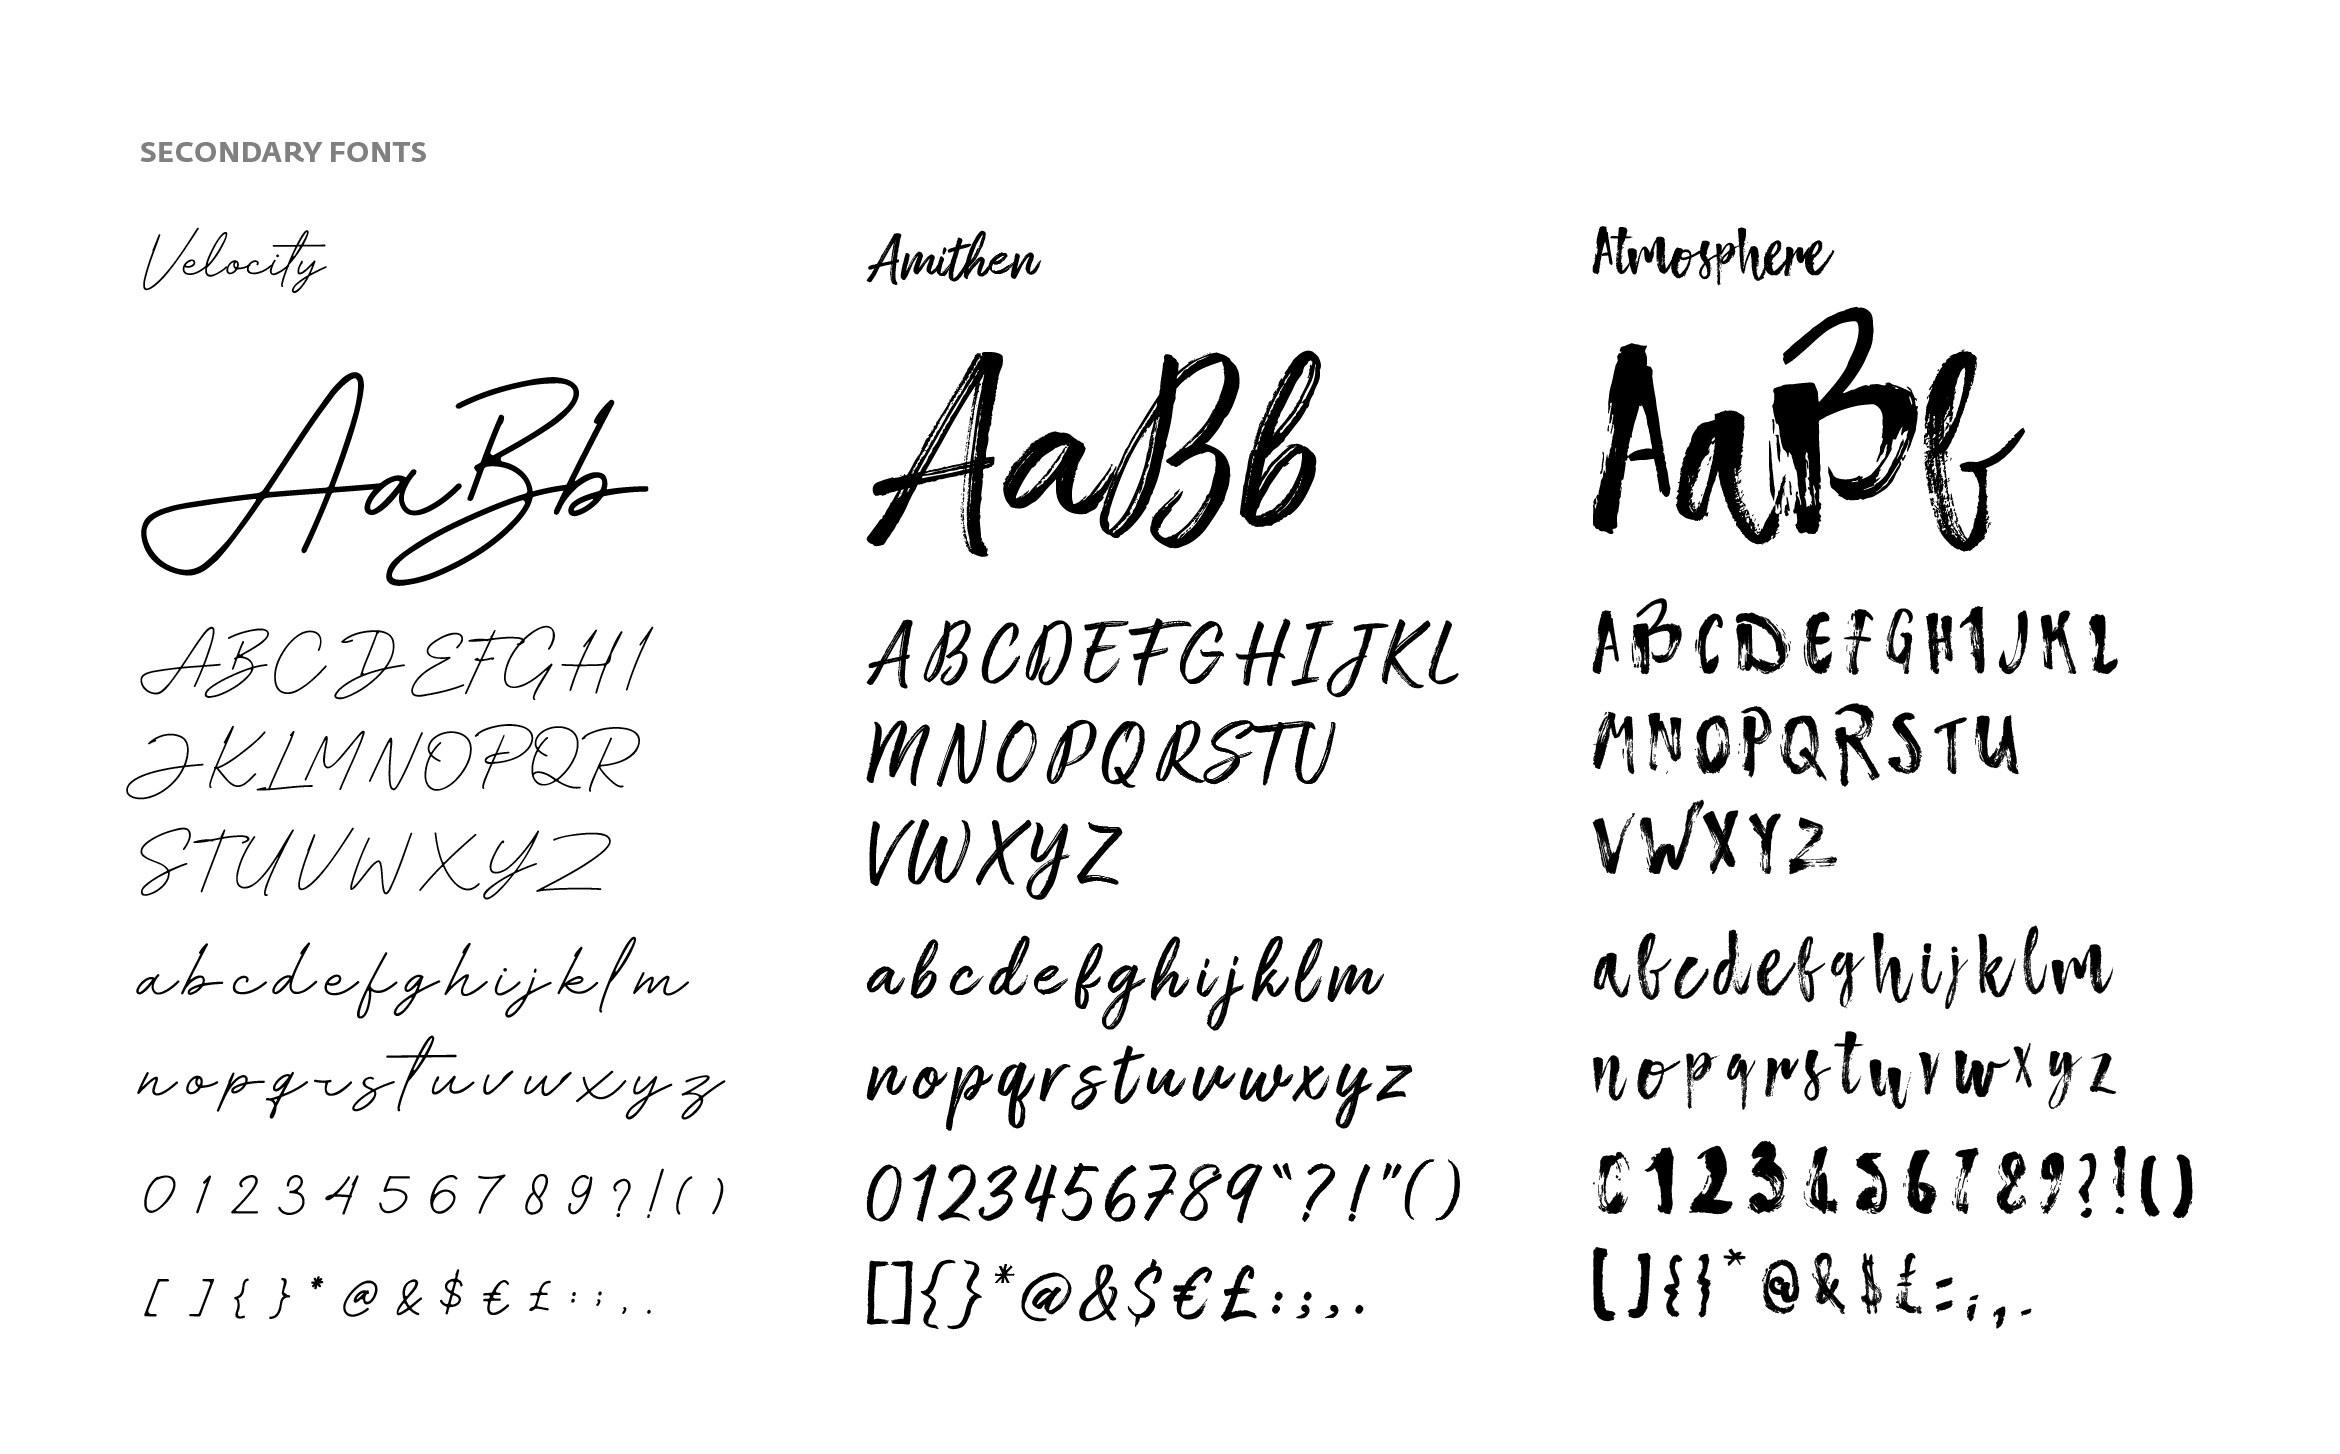 Secondary fonts